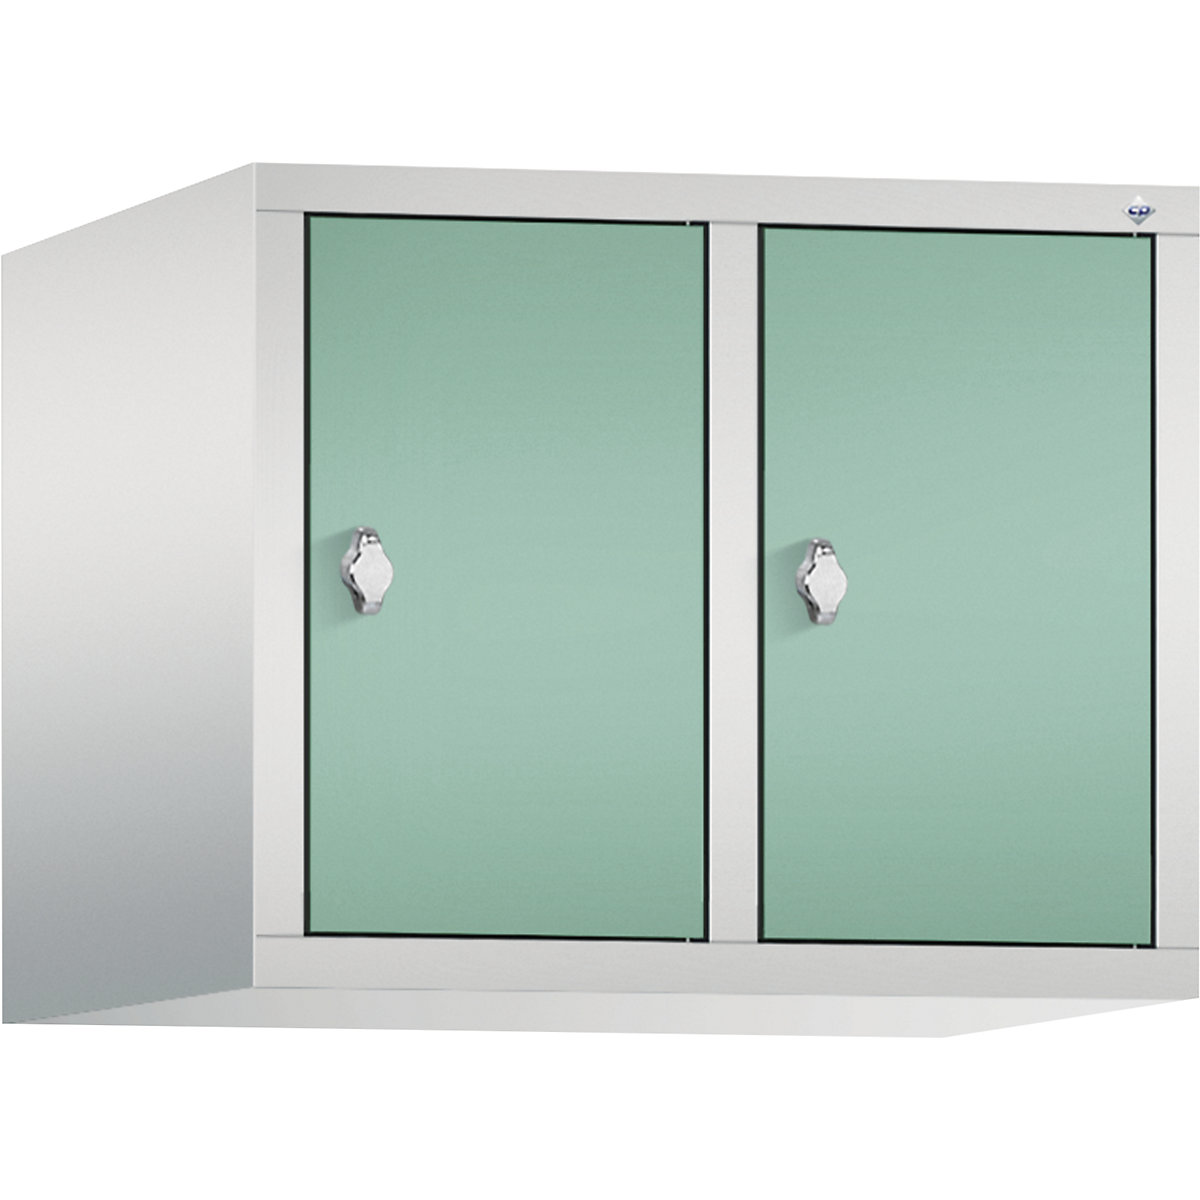 C+P – Altillo CLASSIC, 2 compartimentos, anchura de compartimento 300 mm, gris luminoso / verde luminoso